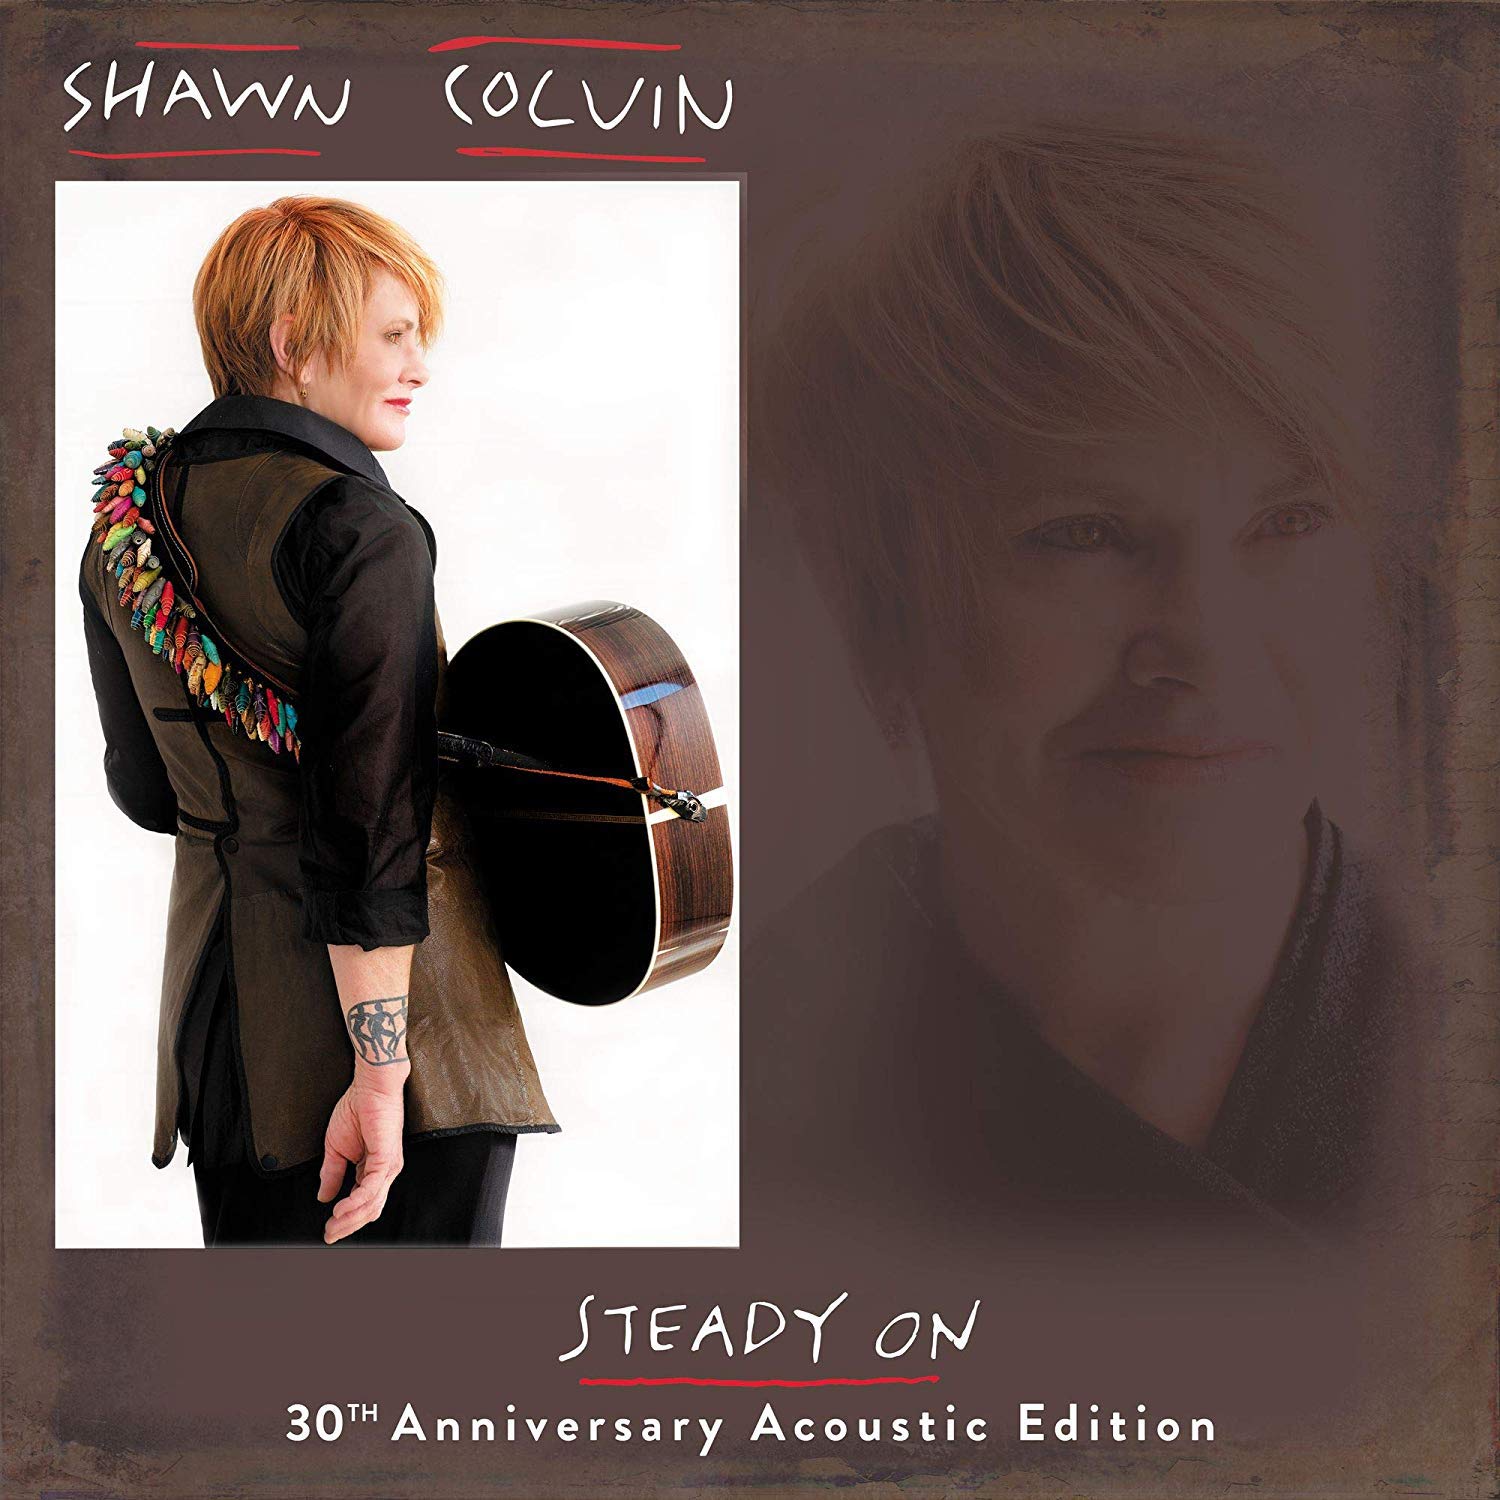 Shawn Colvin - Steady On (Vinyl LP)